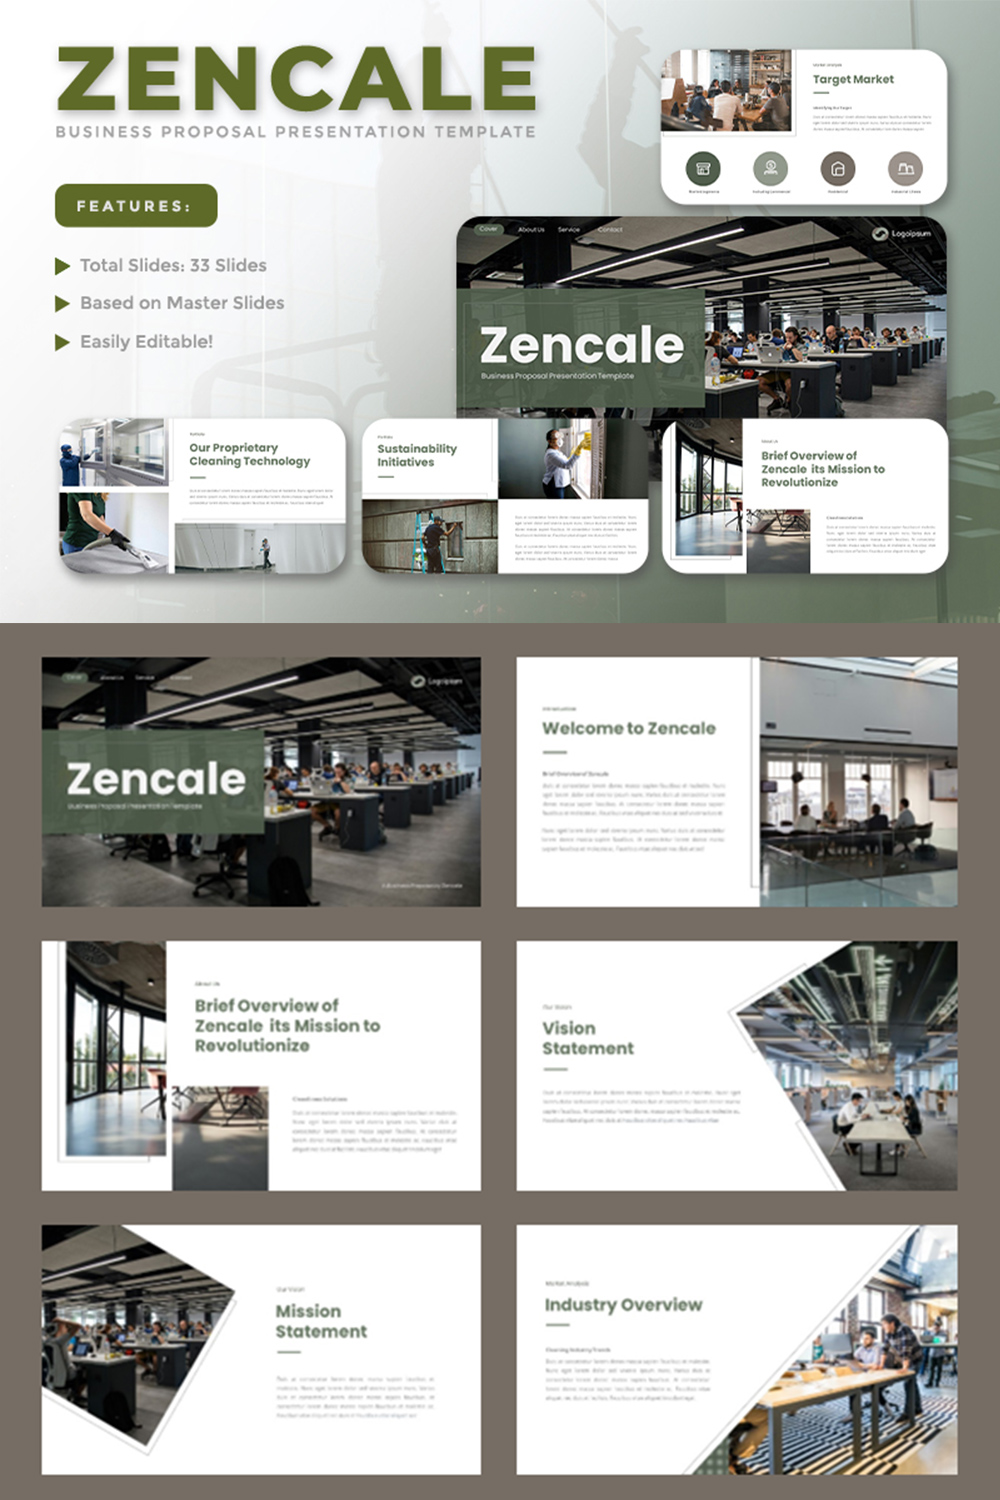 Zencale - Business Proposal Google Slides Template pinterest preview image.